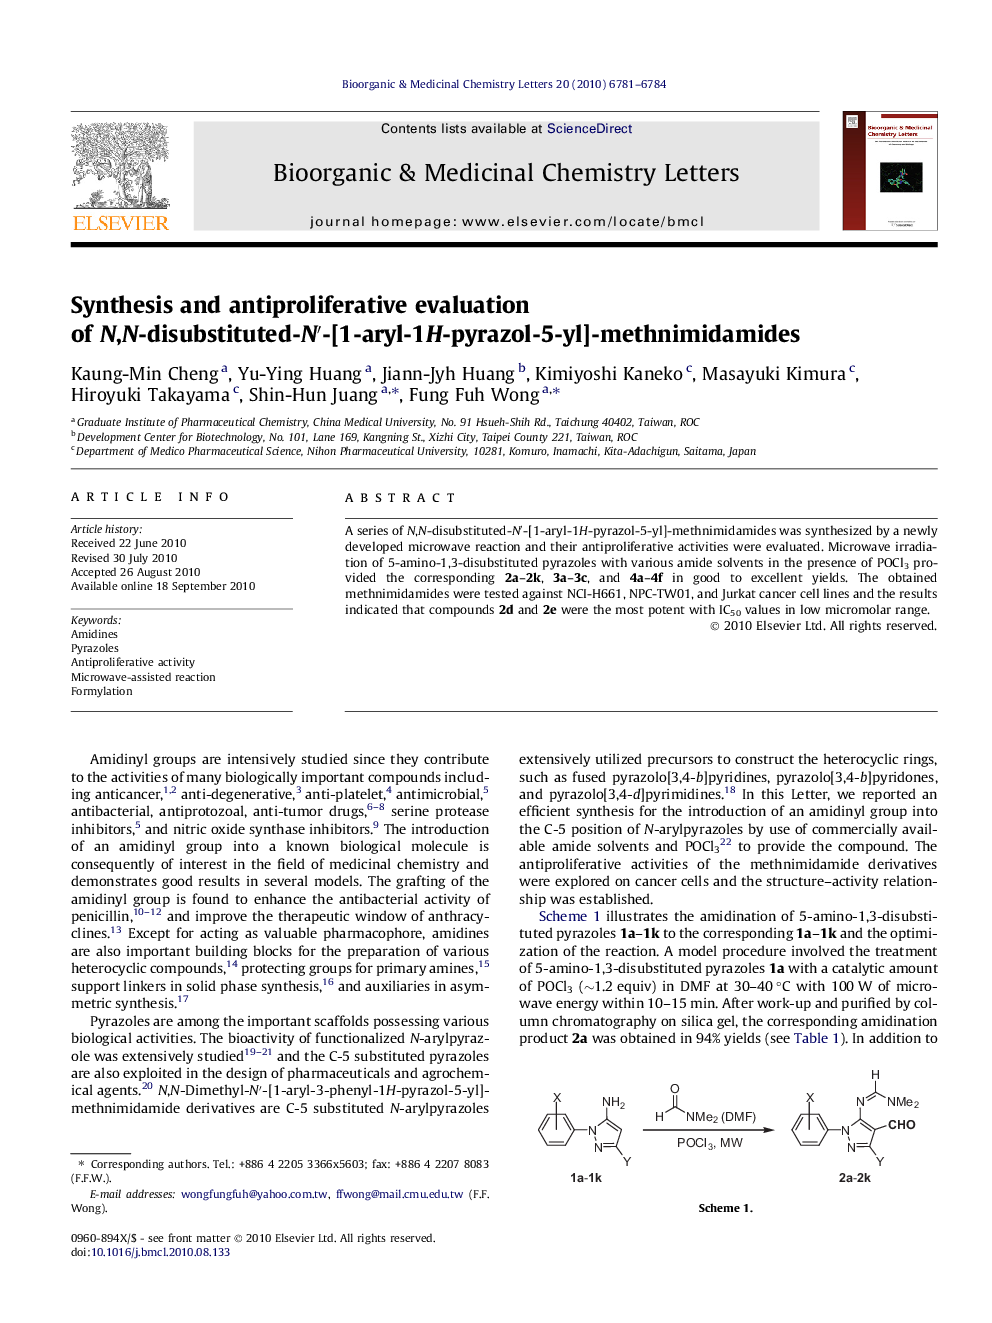 Synthesis and antiproliferative evaluation of N,N-disubstituted-N′-[1-aryl-1H-pyrazol-5-yl]-methnimidamides